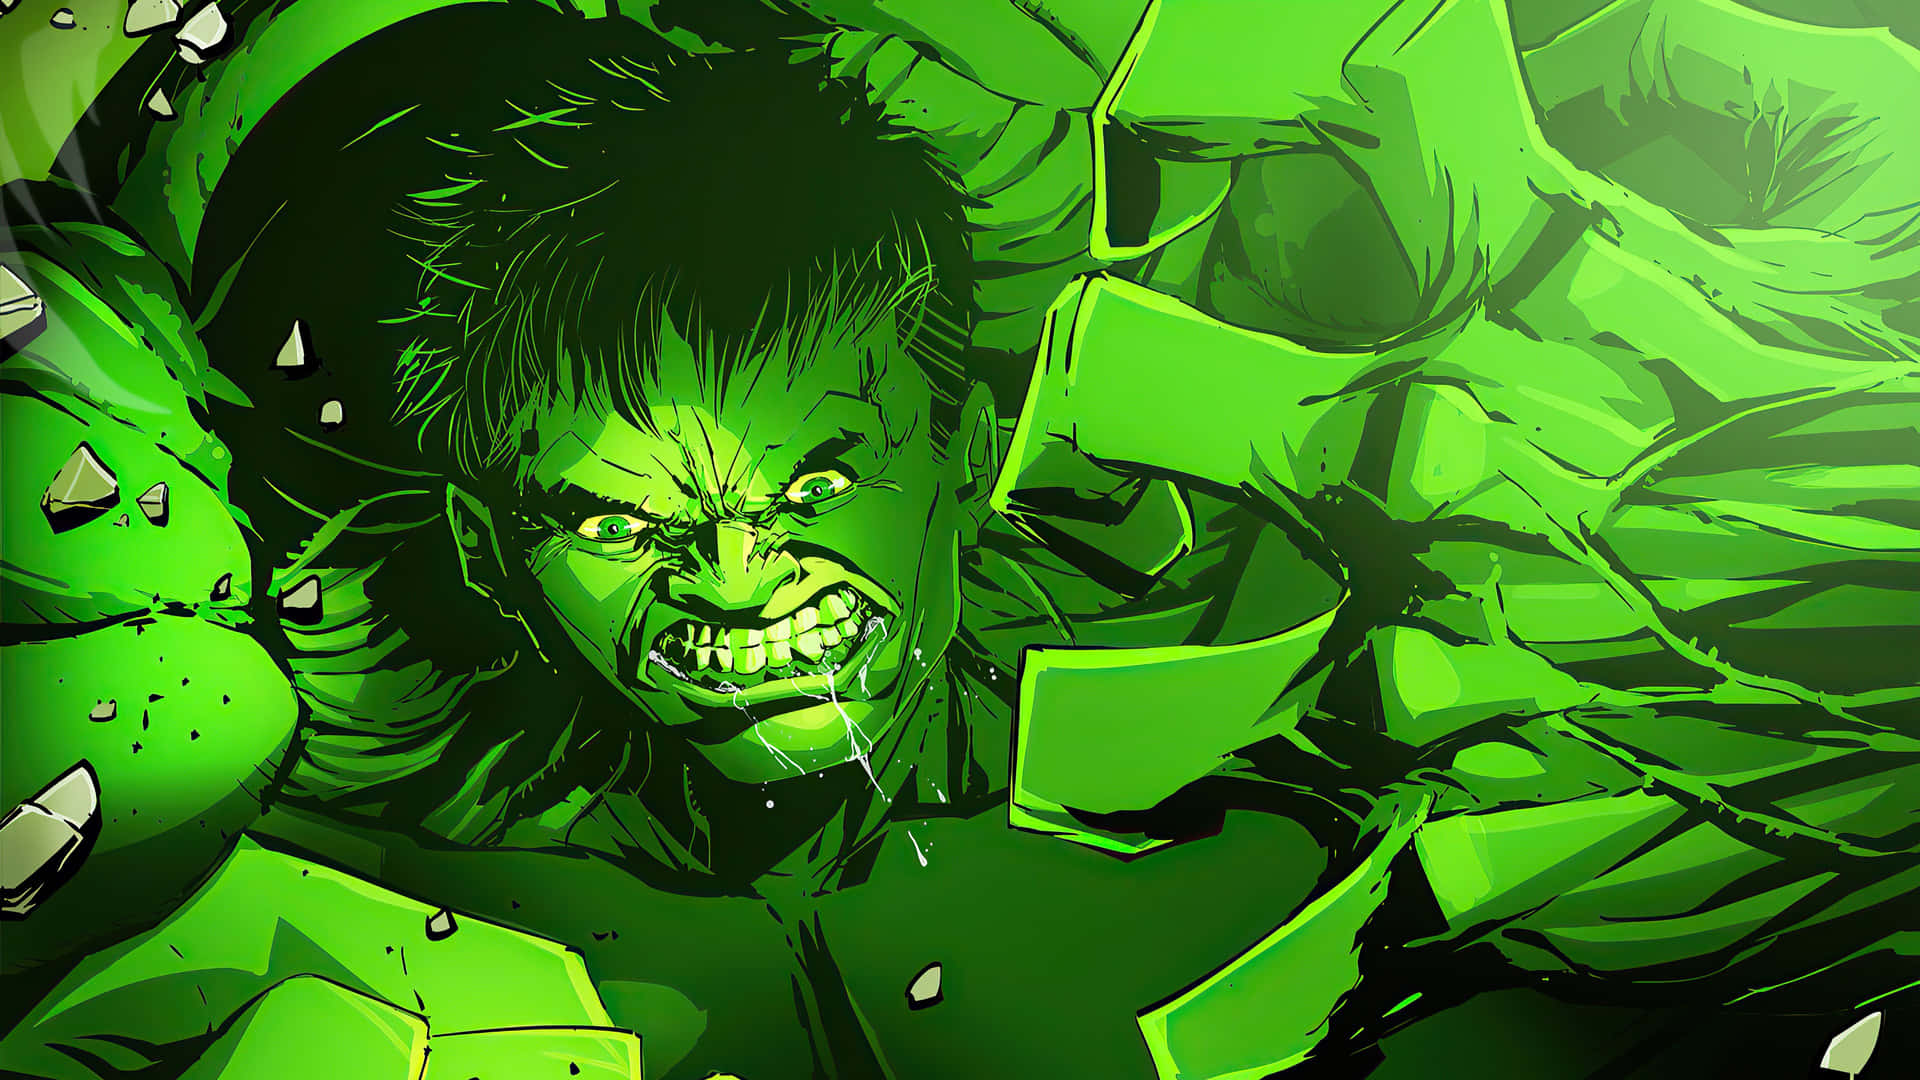 "The Incredible Hulk Demoing His Strength"